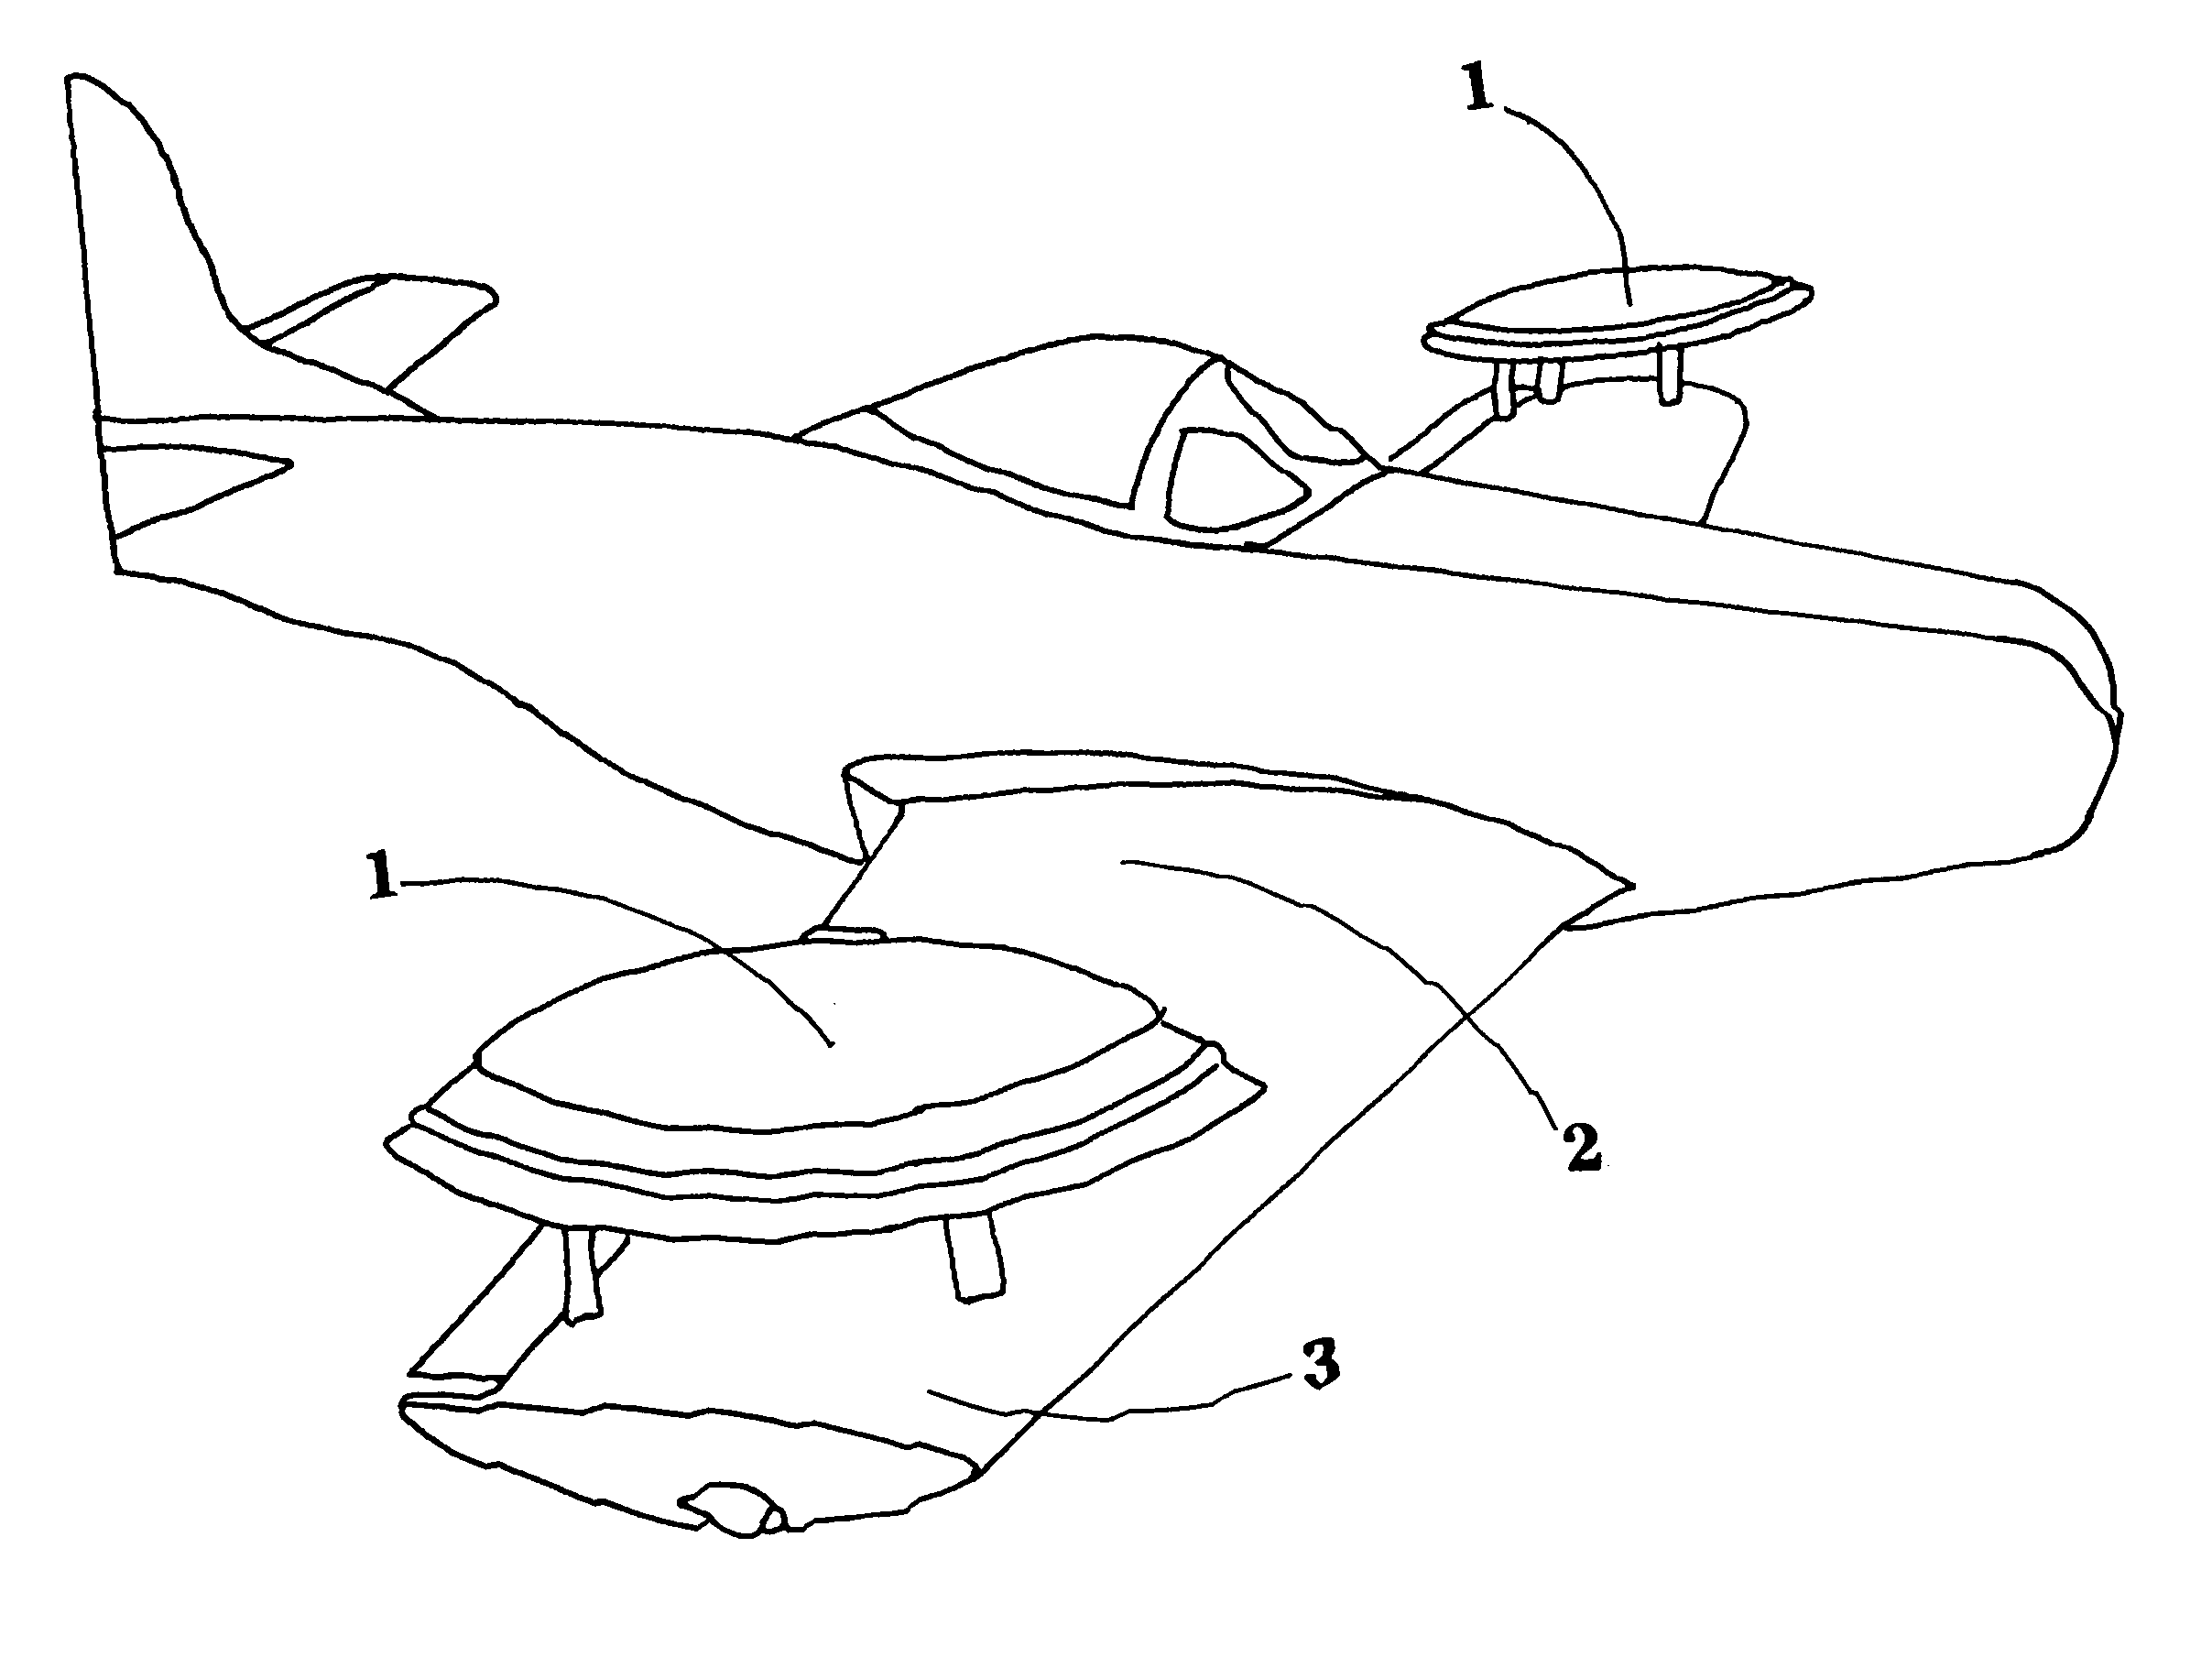 Hamilton H.N2 laminar flow diskette wing